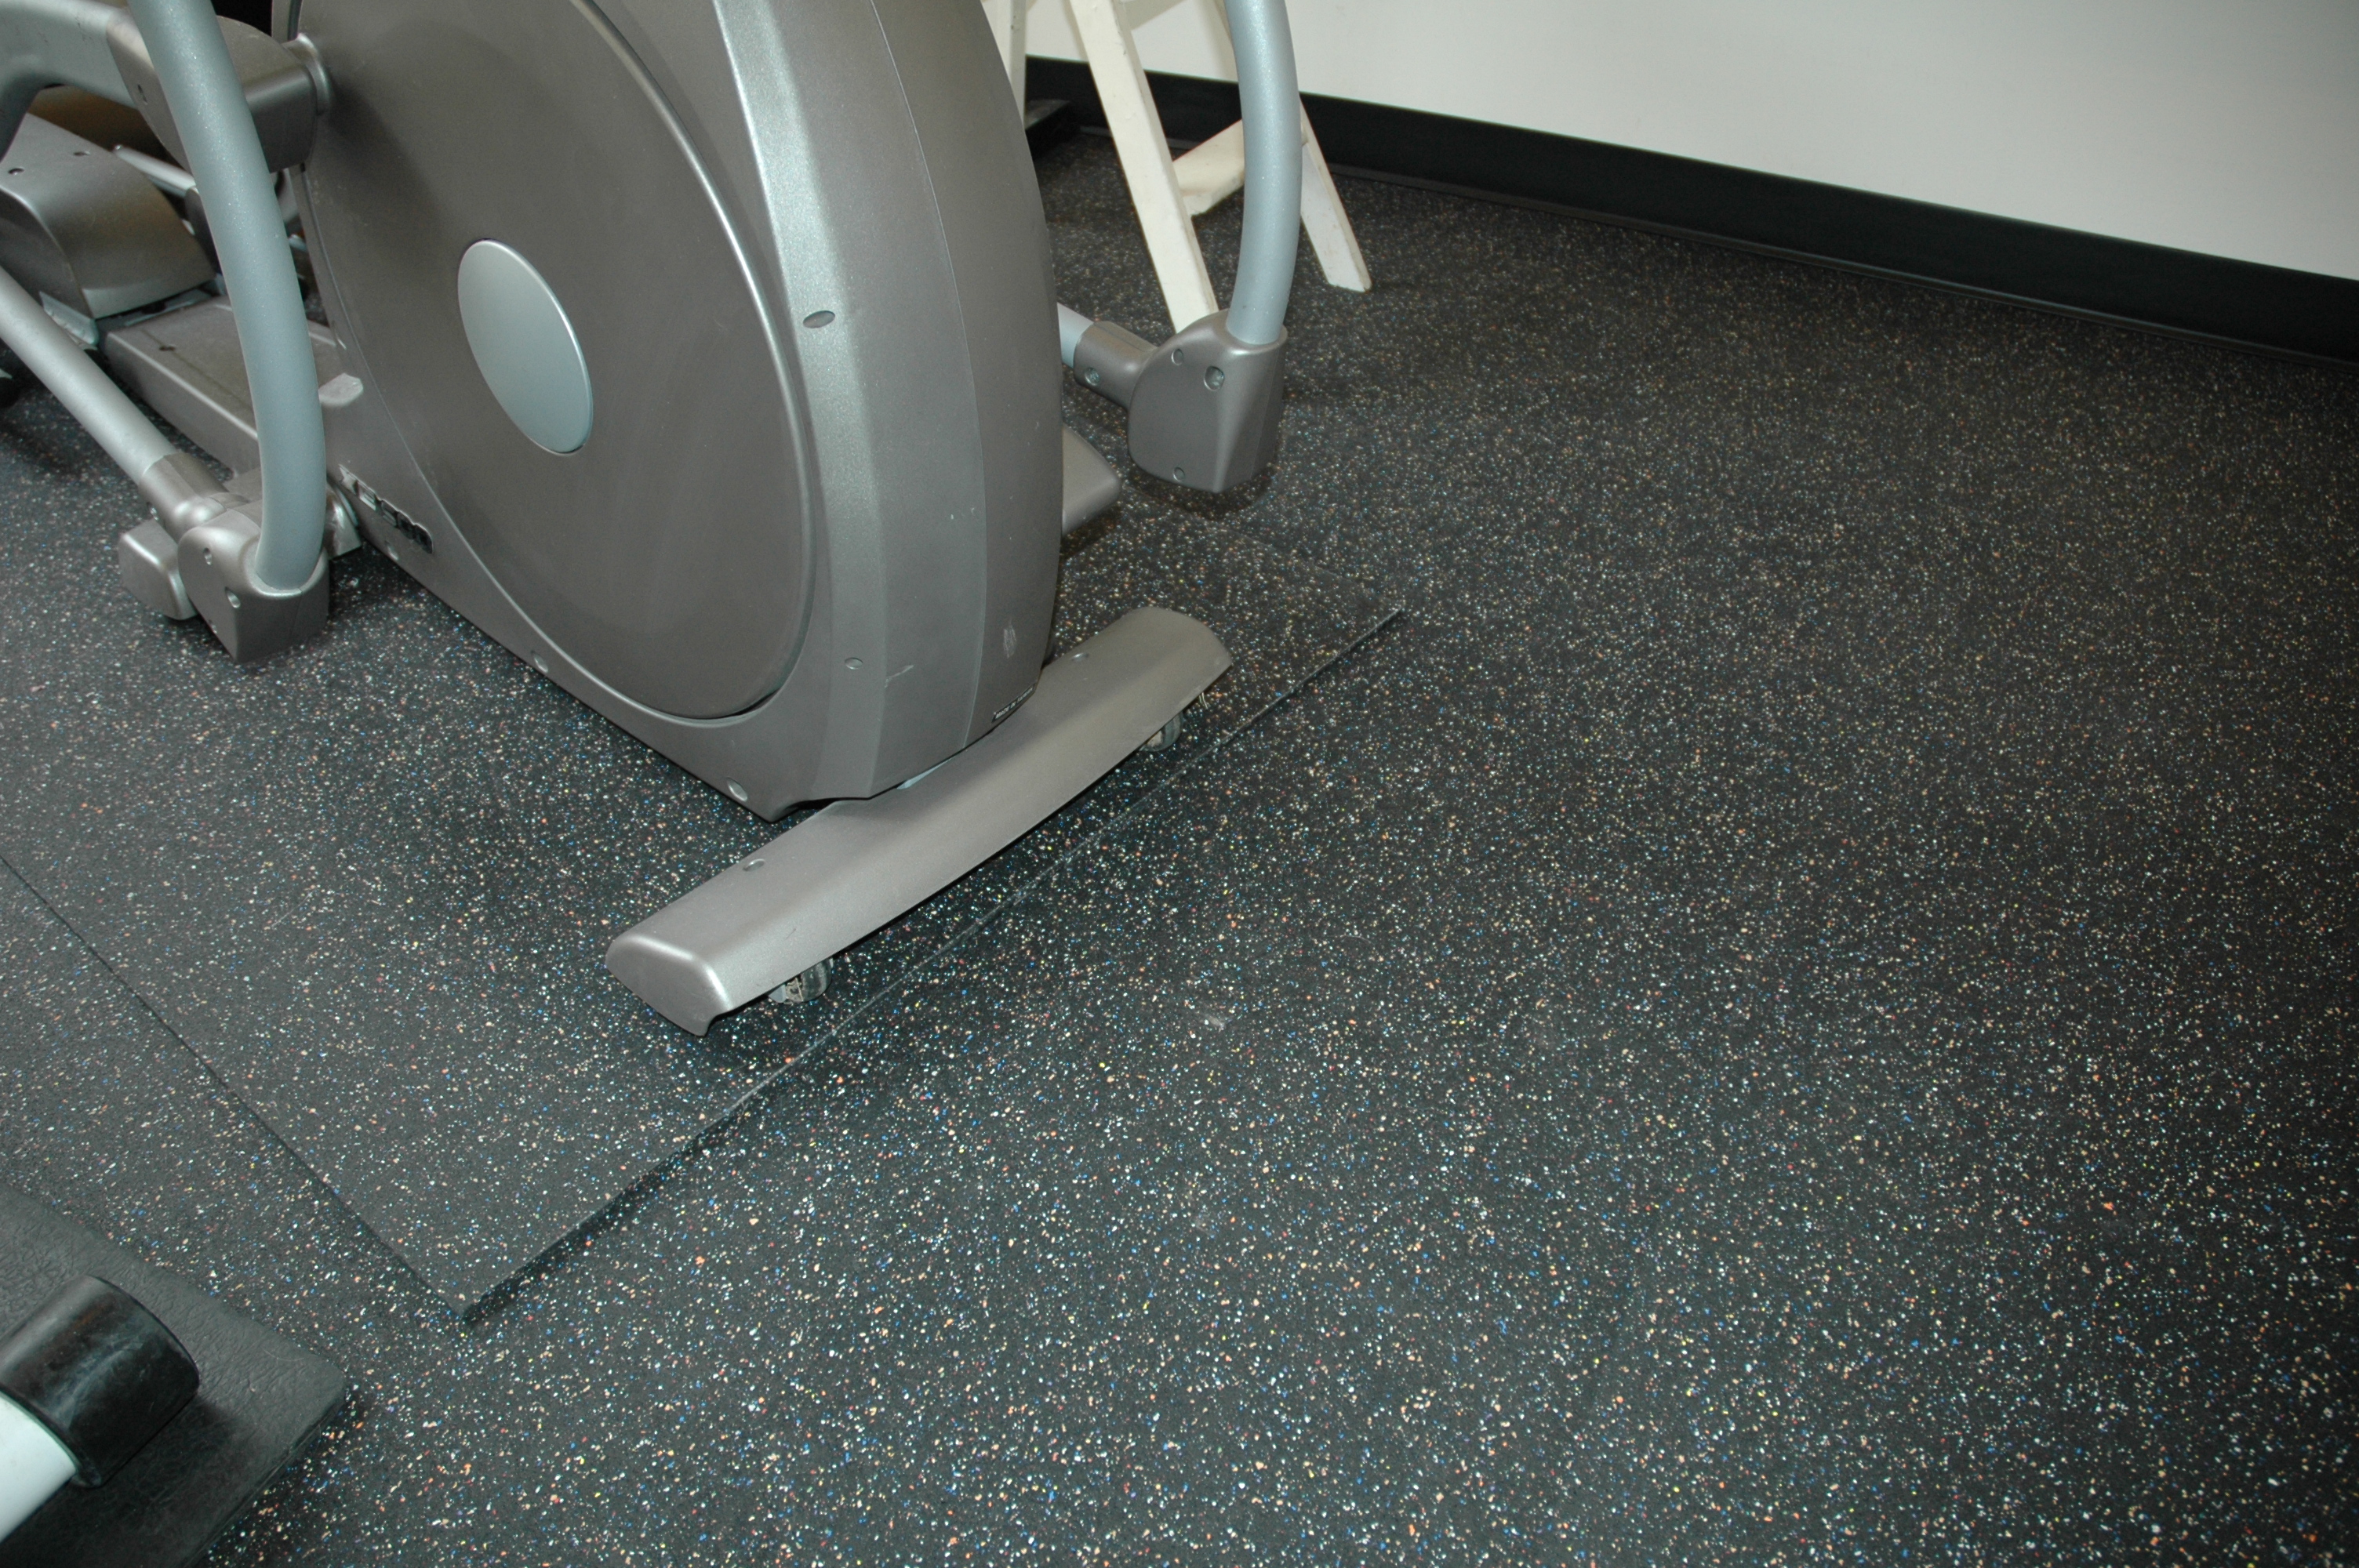 Rubber Flooring Roll Geneva 3/8 Inch Regrind Confetti Per SF customer review photo 1